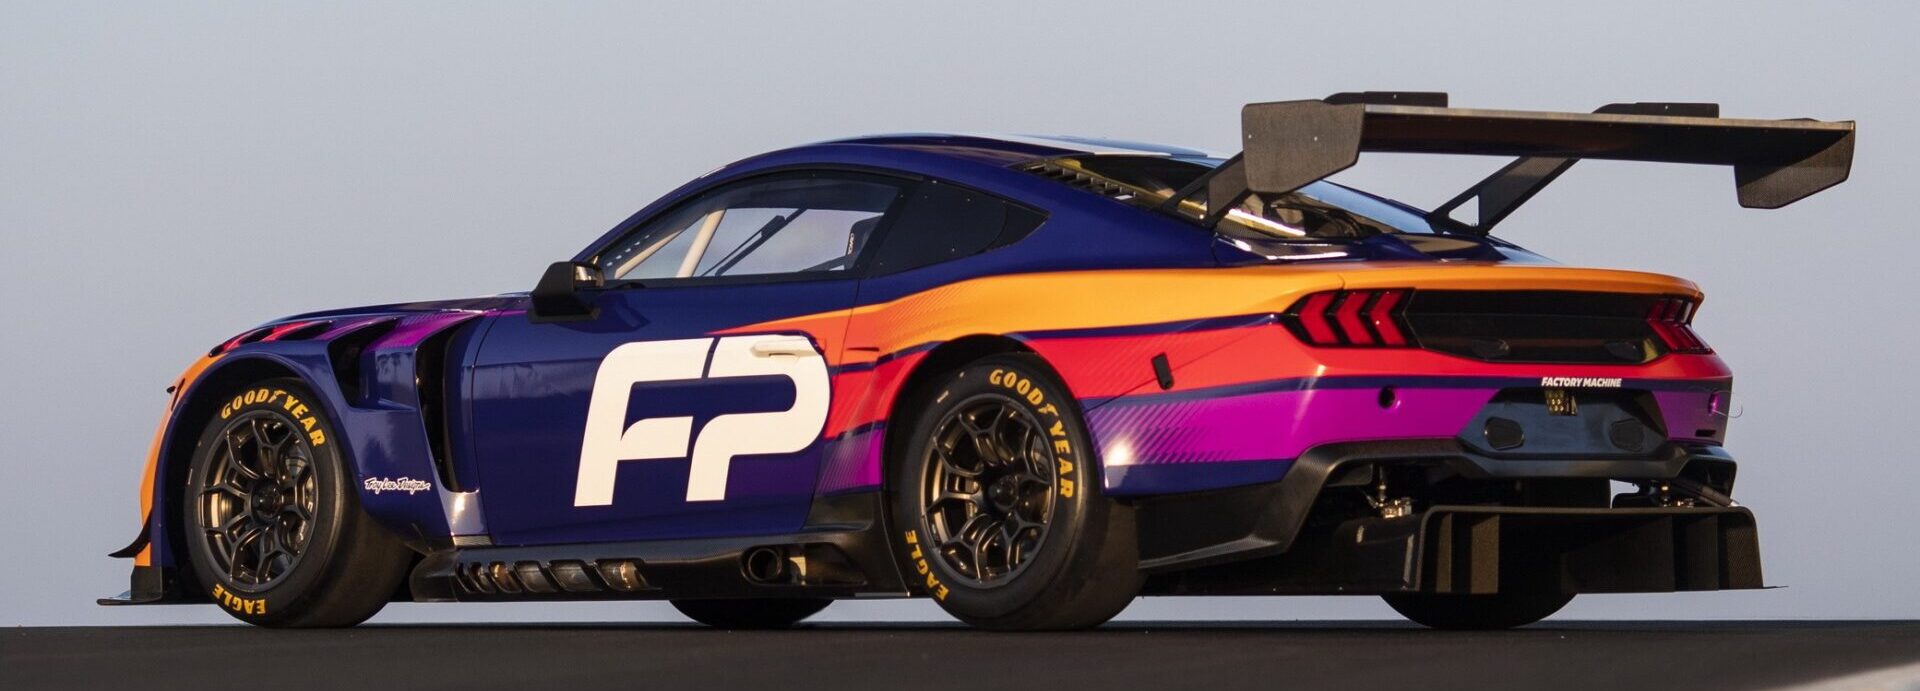 Представлен гоночный автомобиль GT3 на базе Ford Mustang Dark Horse